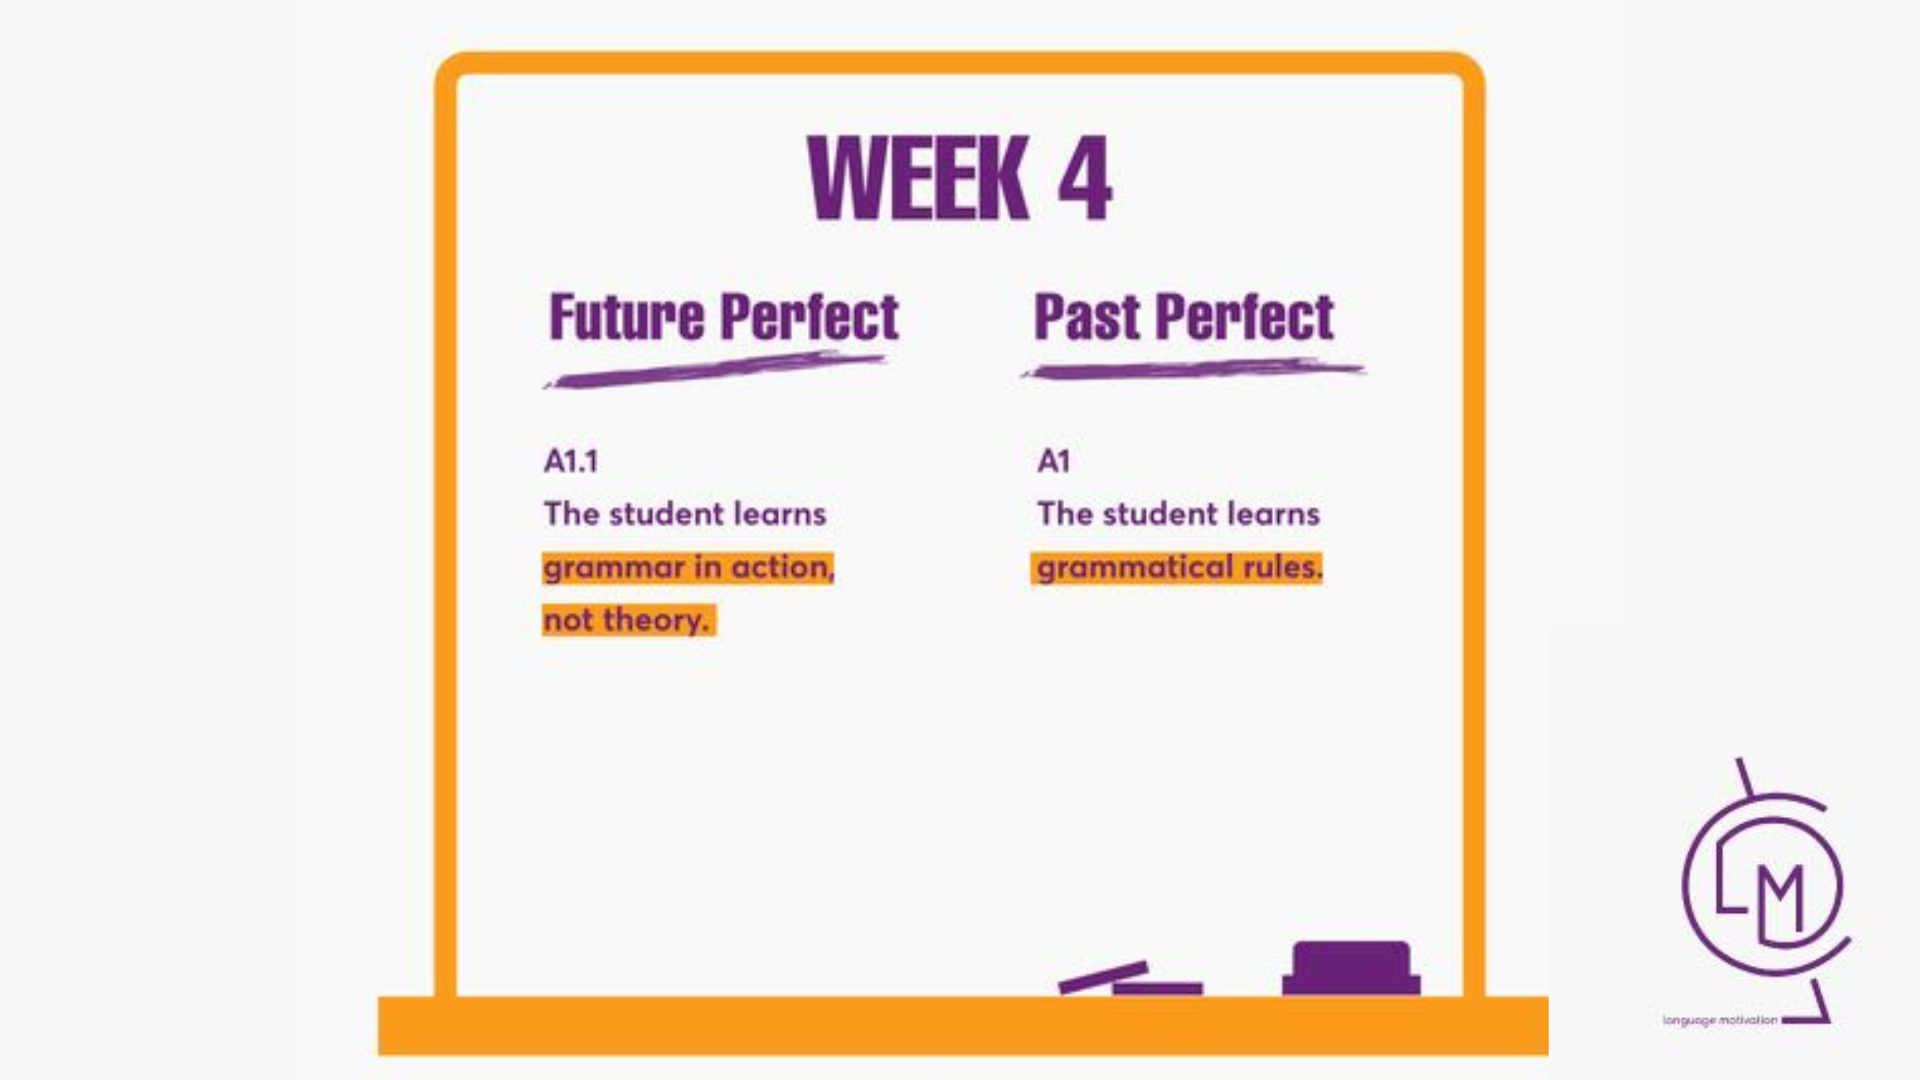 Future Perfect vs Past Perfect -> Week 4